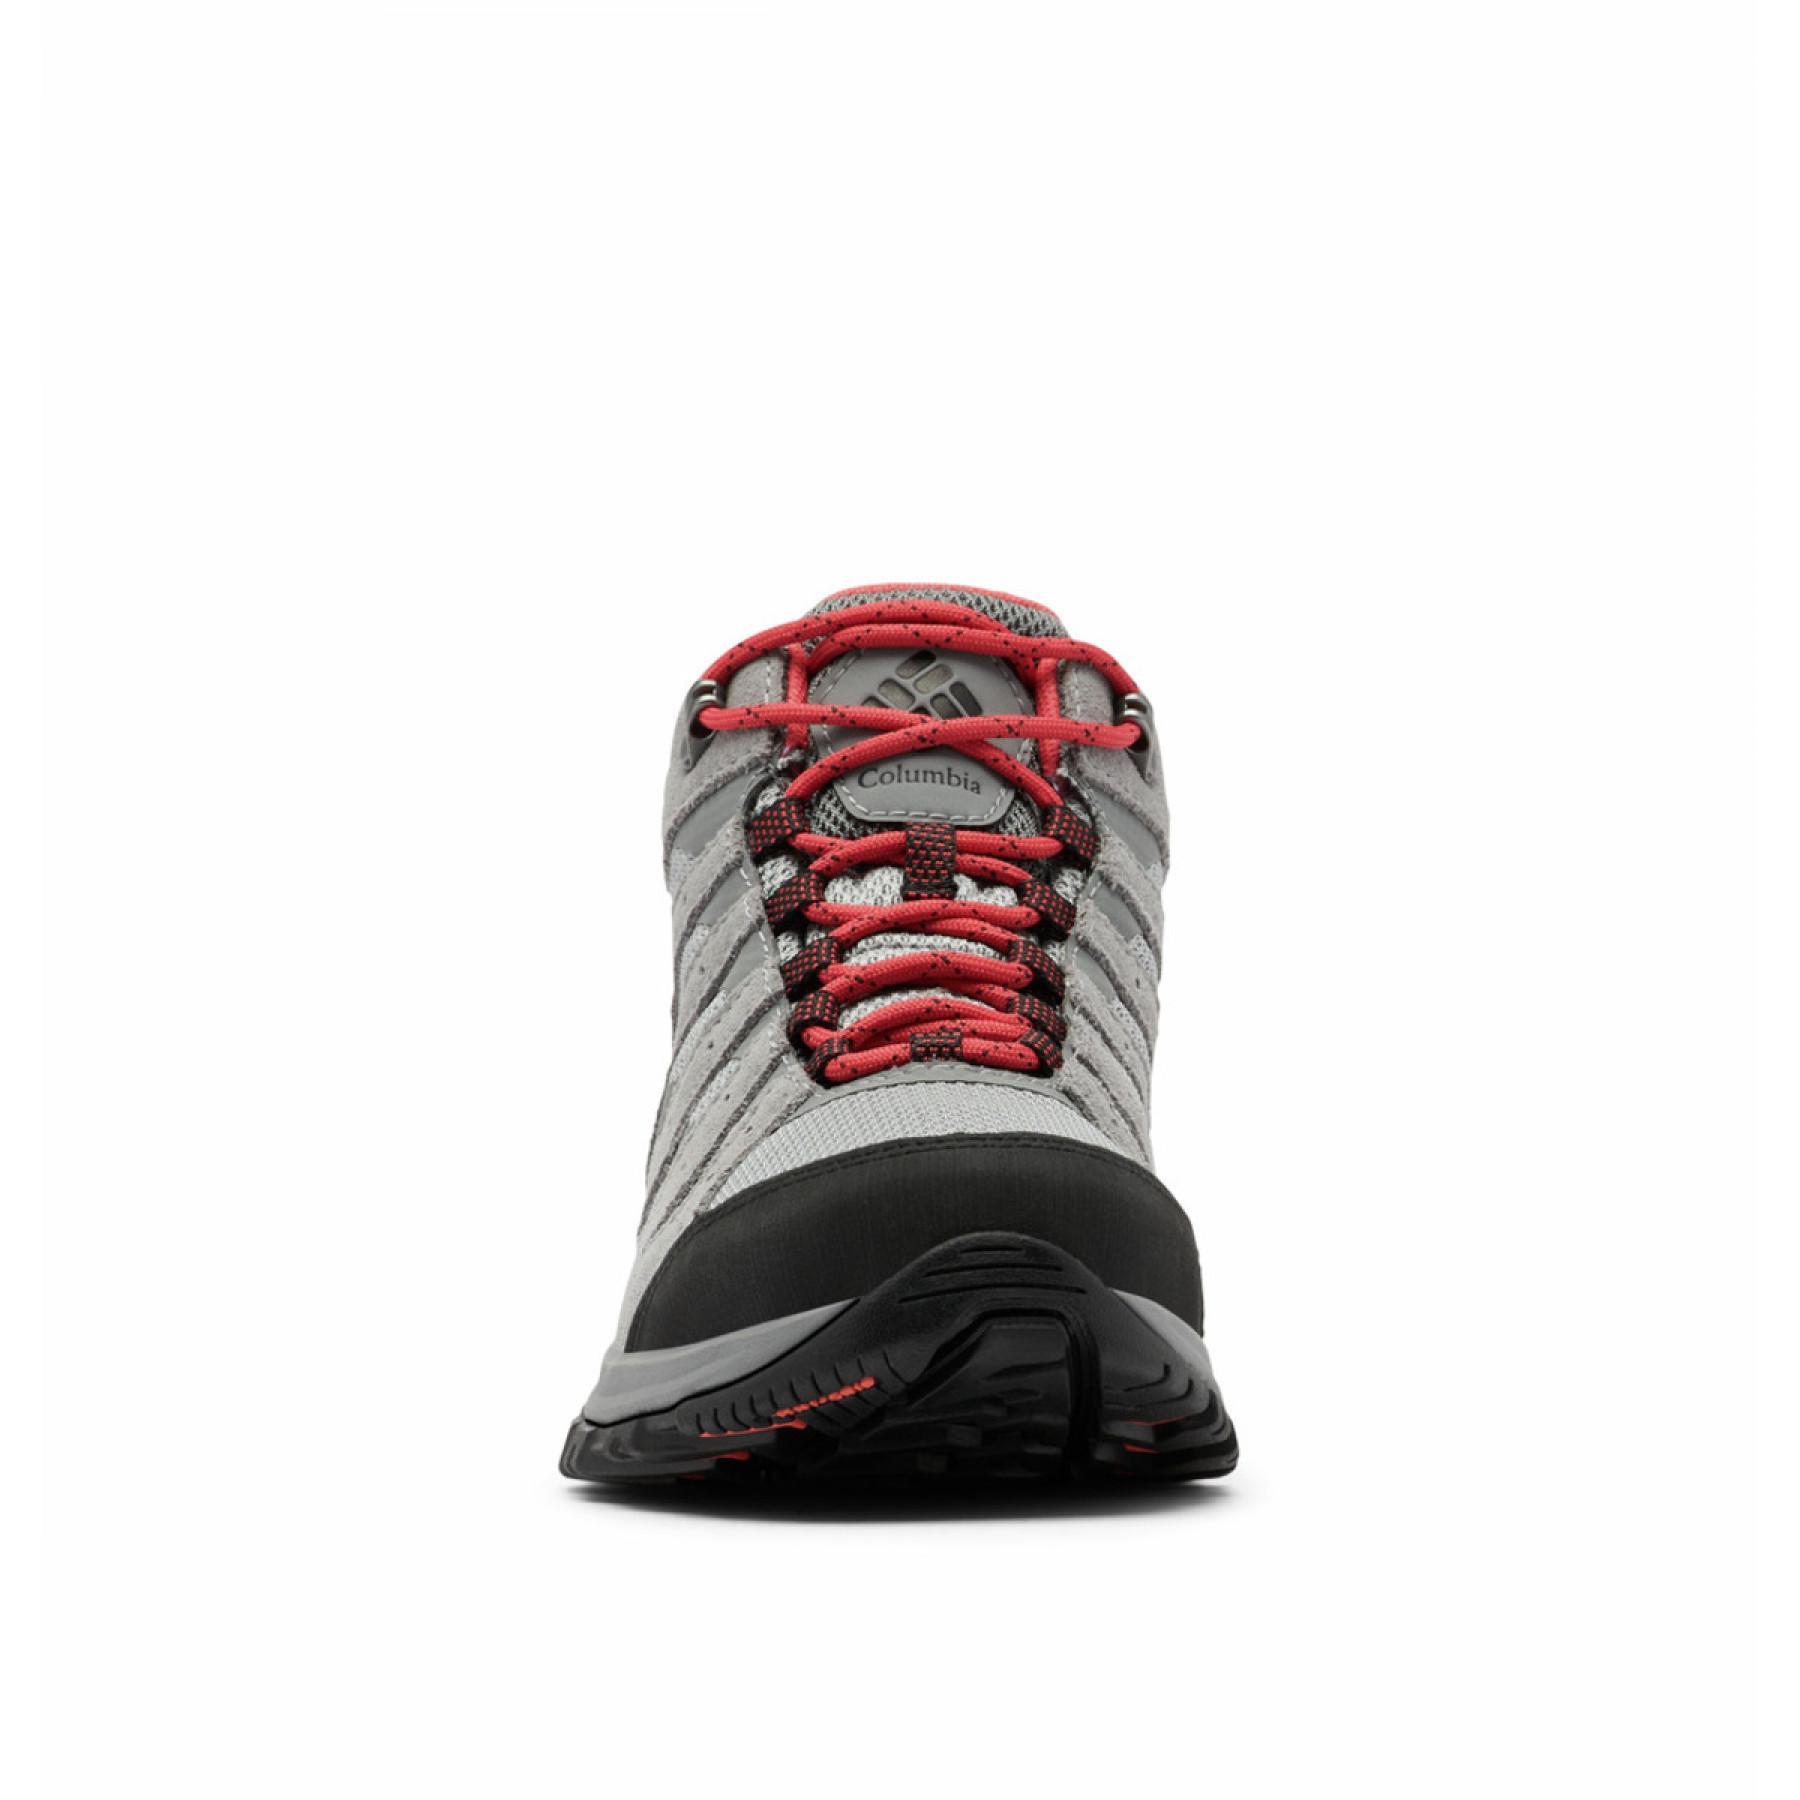 Women's hiking shoes Columbia REDMOND III MID WATERPROOF